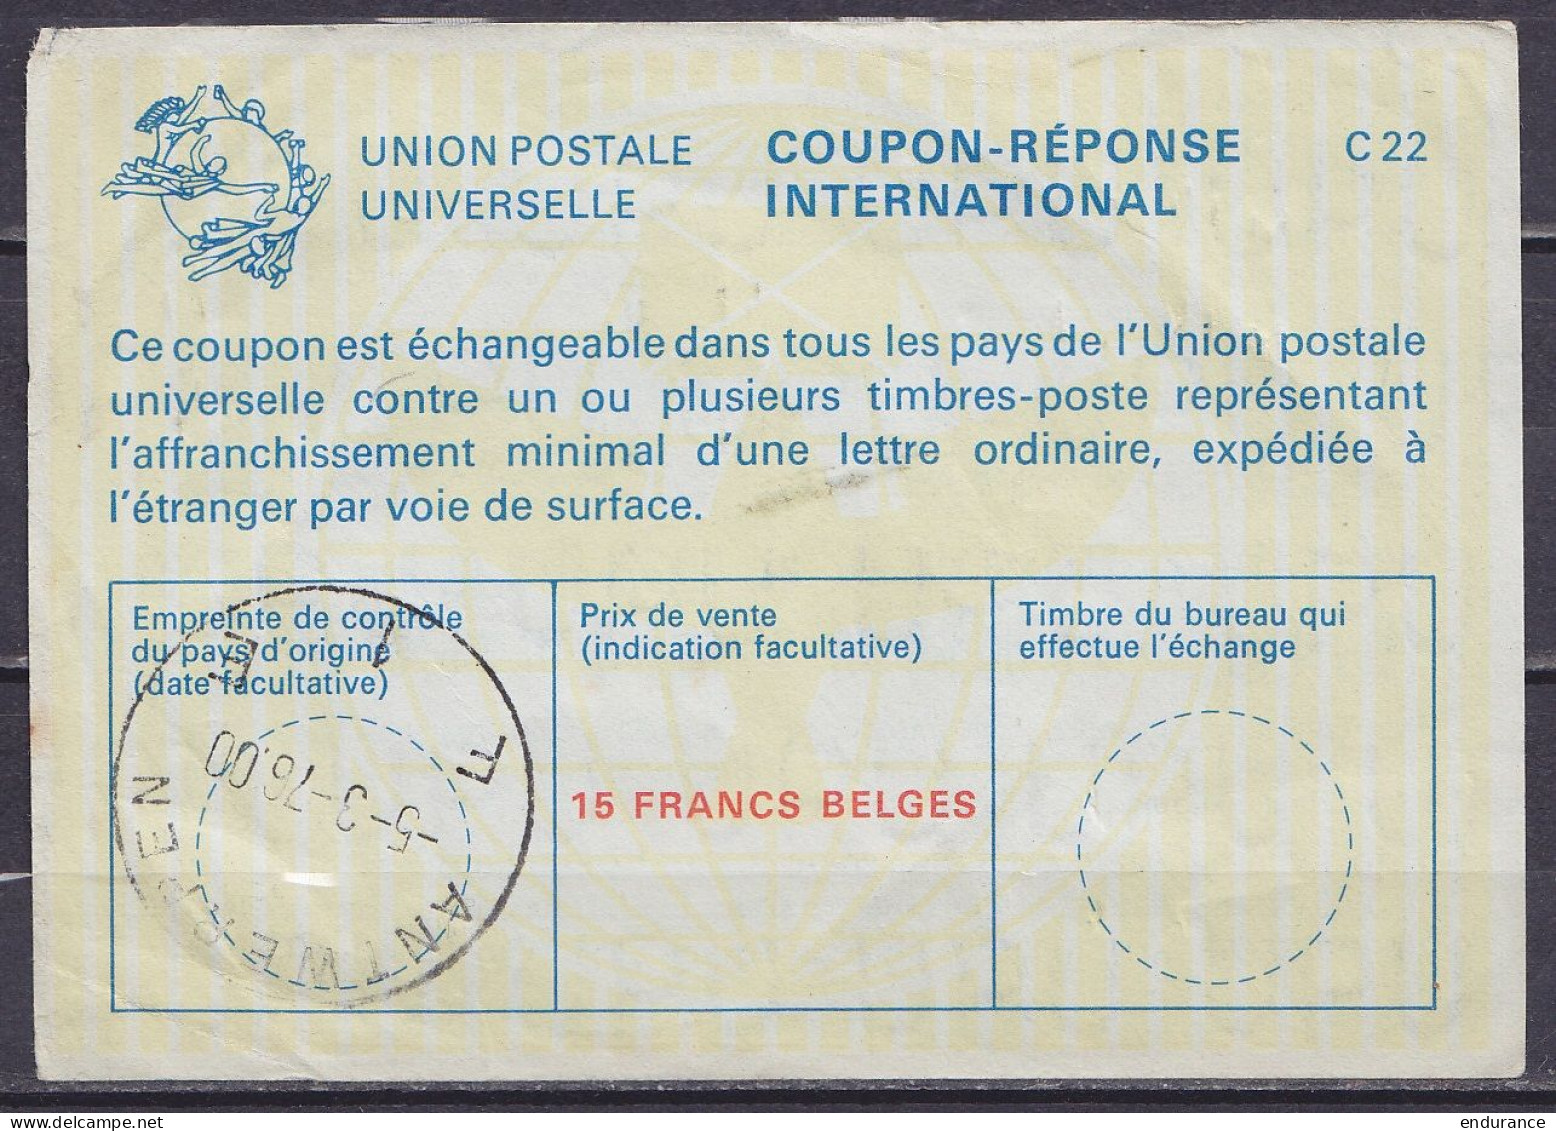 Coupon-réponse International - 15 Fancs Belges Càd ANTWERPEN F1E /-5-3-1976 - International Reply Coupons